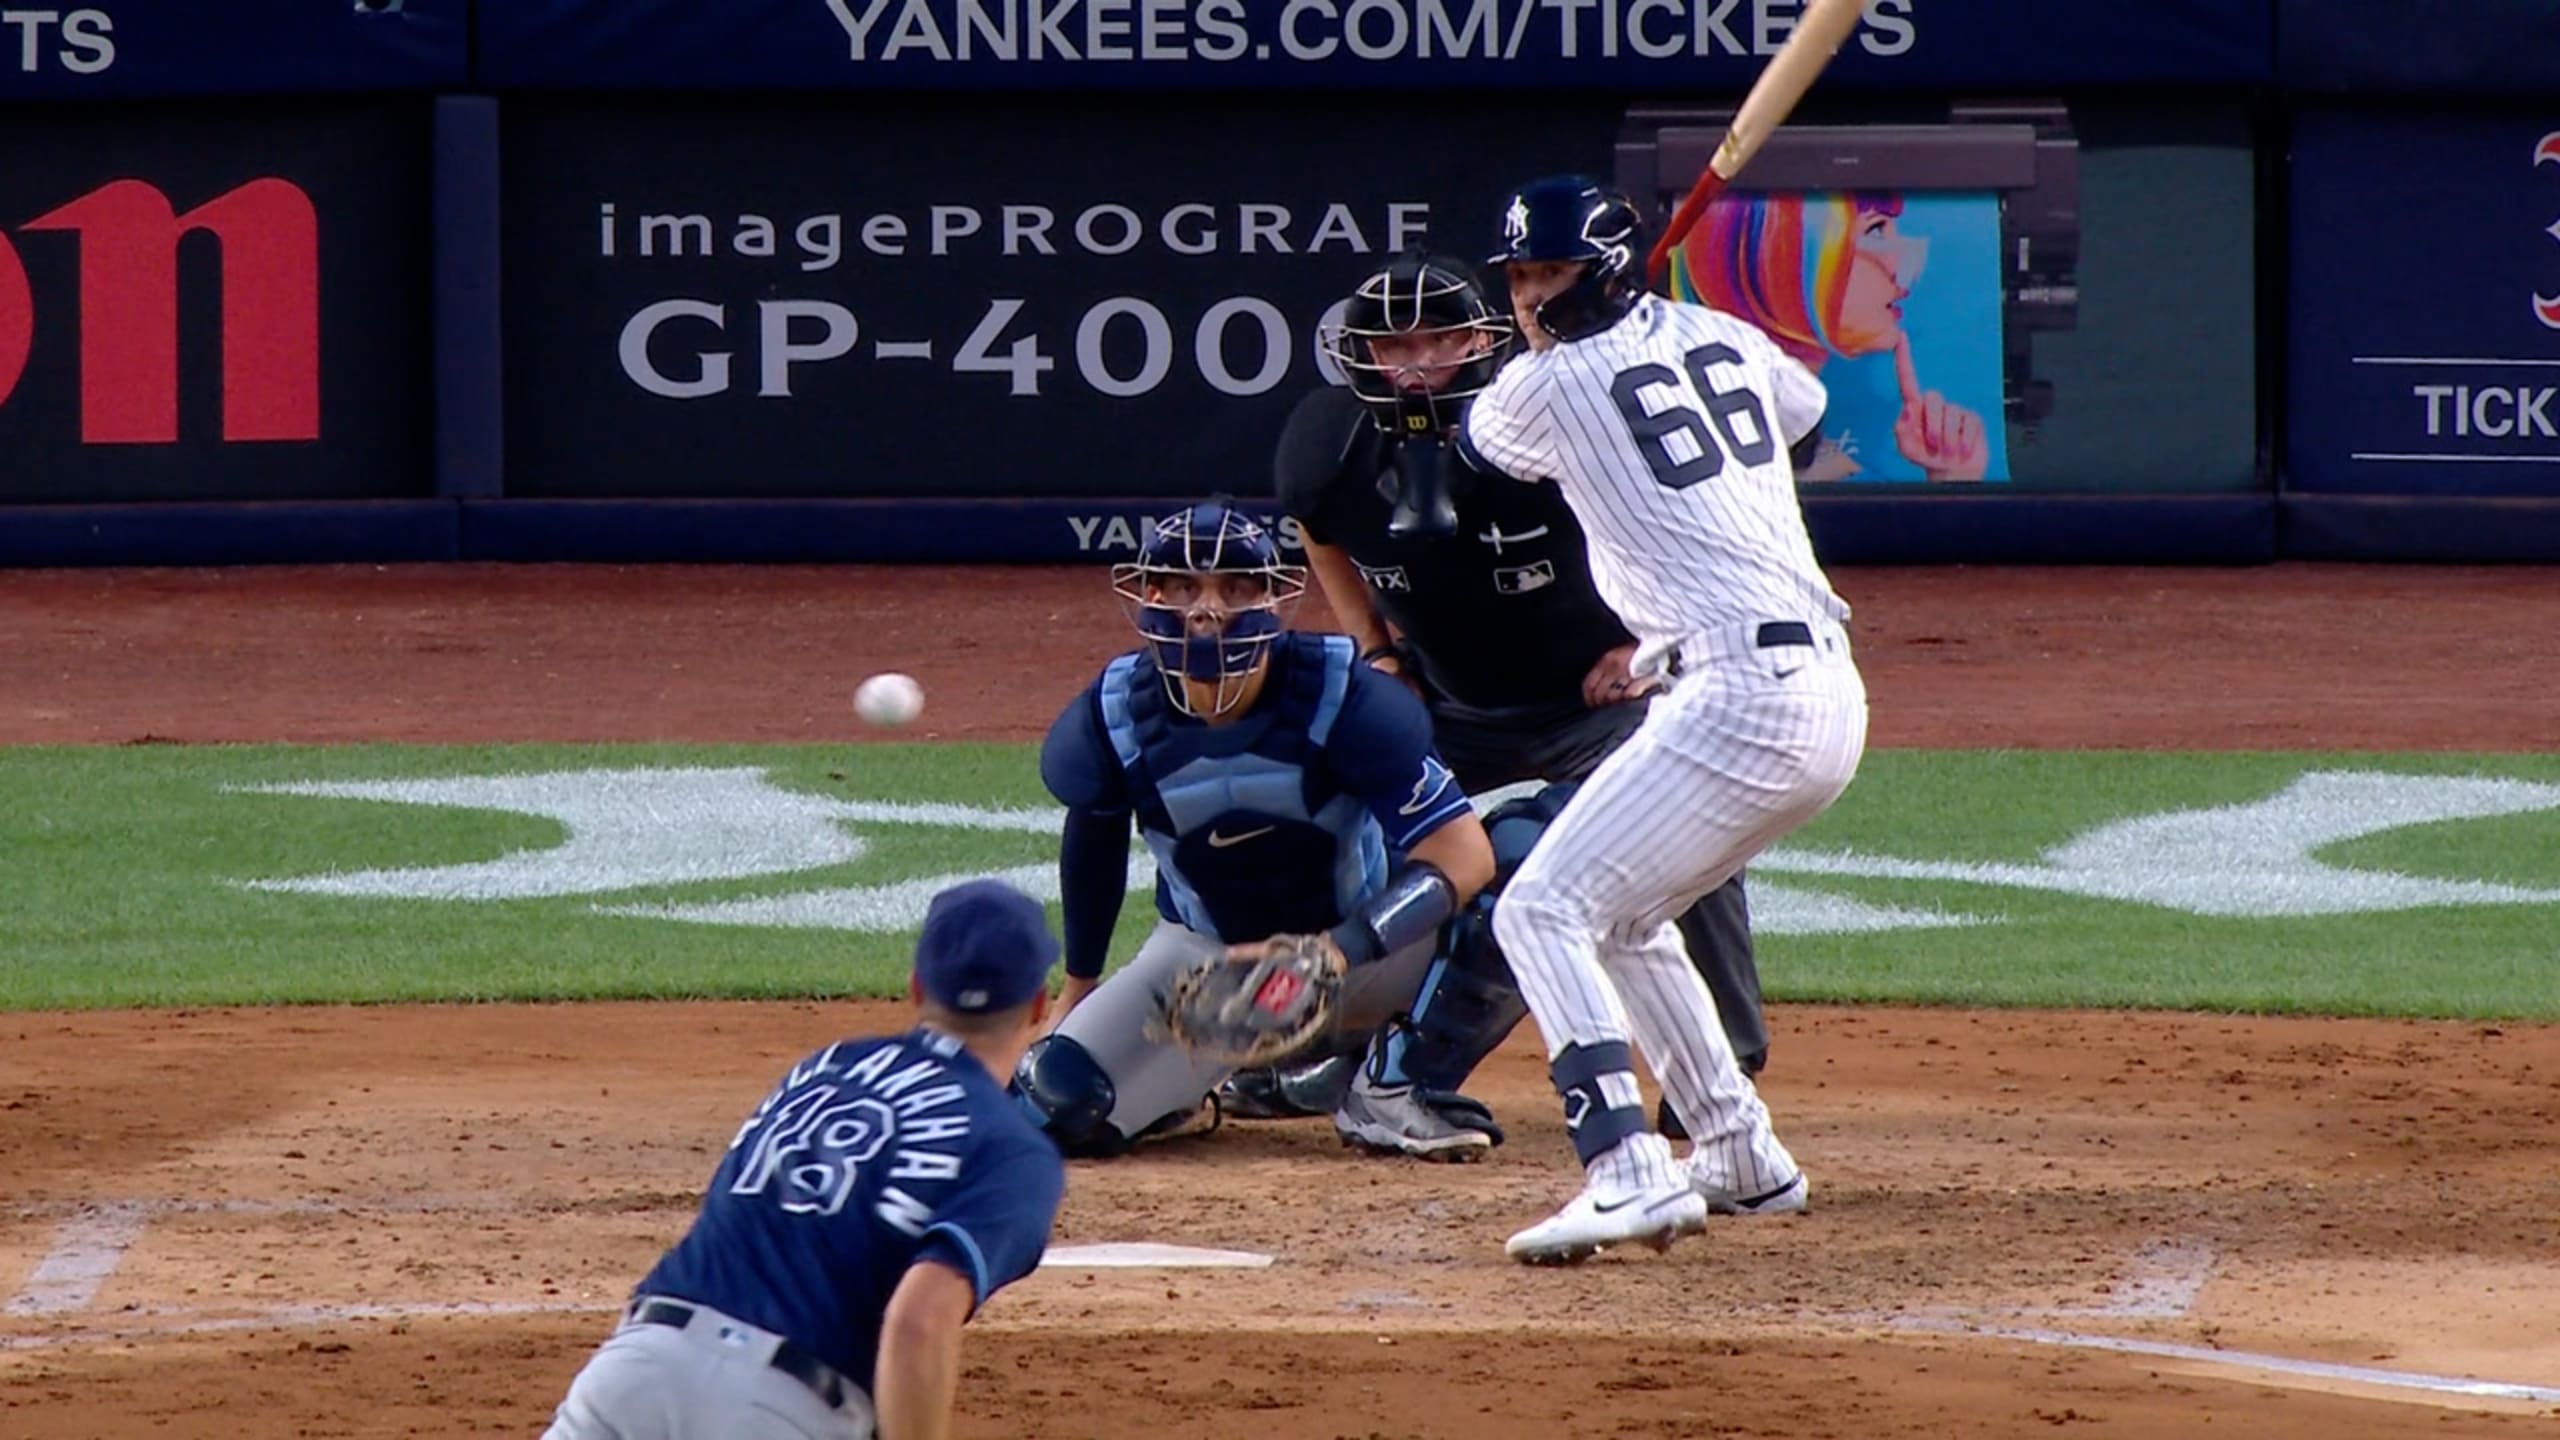 Yankees third string catcher KYLE HIGASHIOKA homers into the